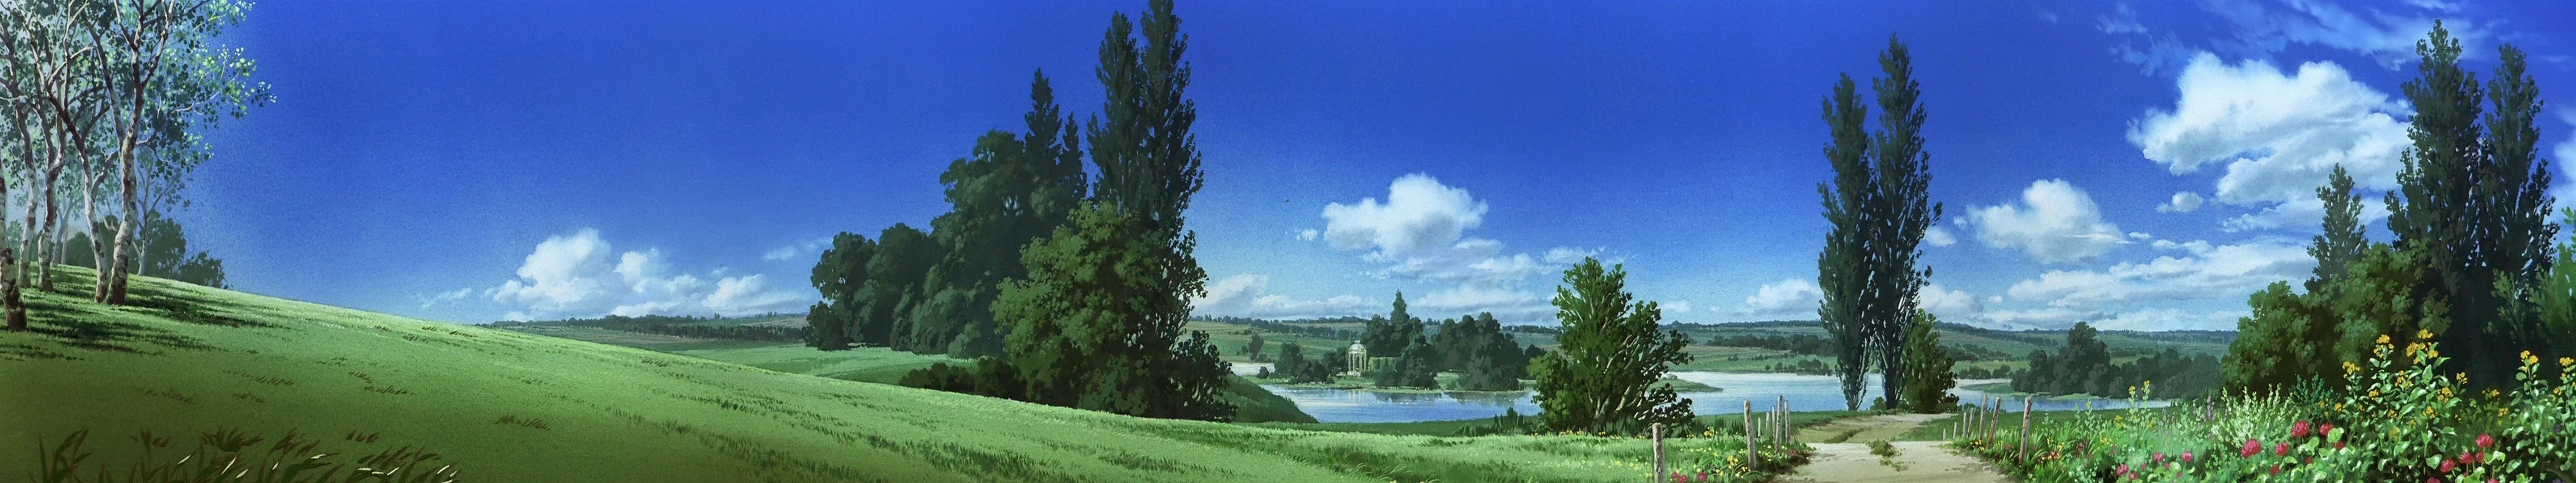 Anime landscape wallpaper [5760x1080]